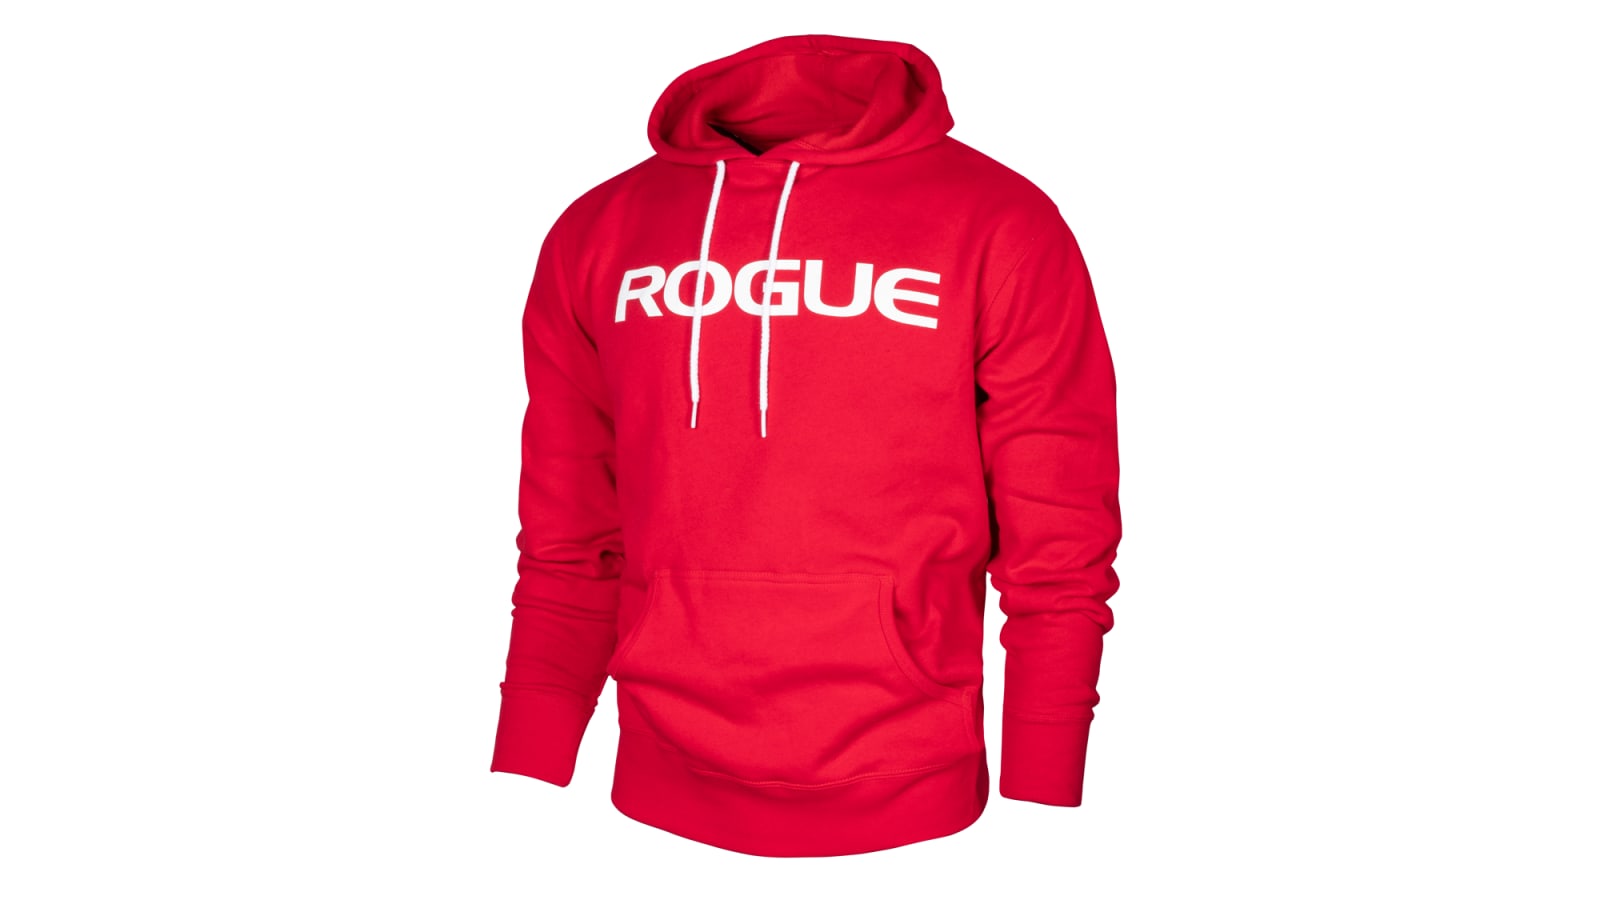 Rogue Lightweight Basic Hoodie